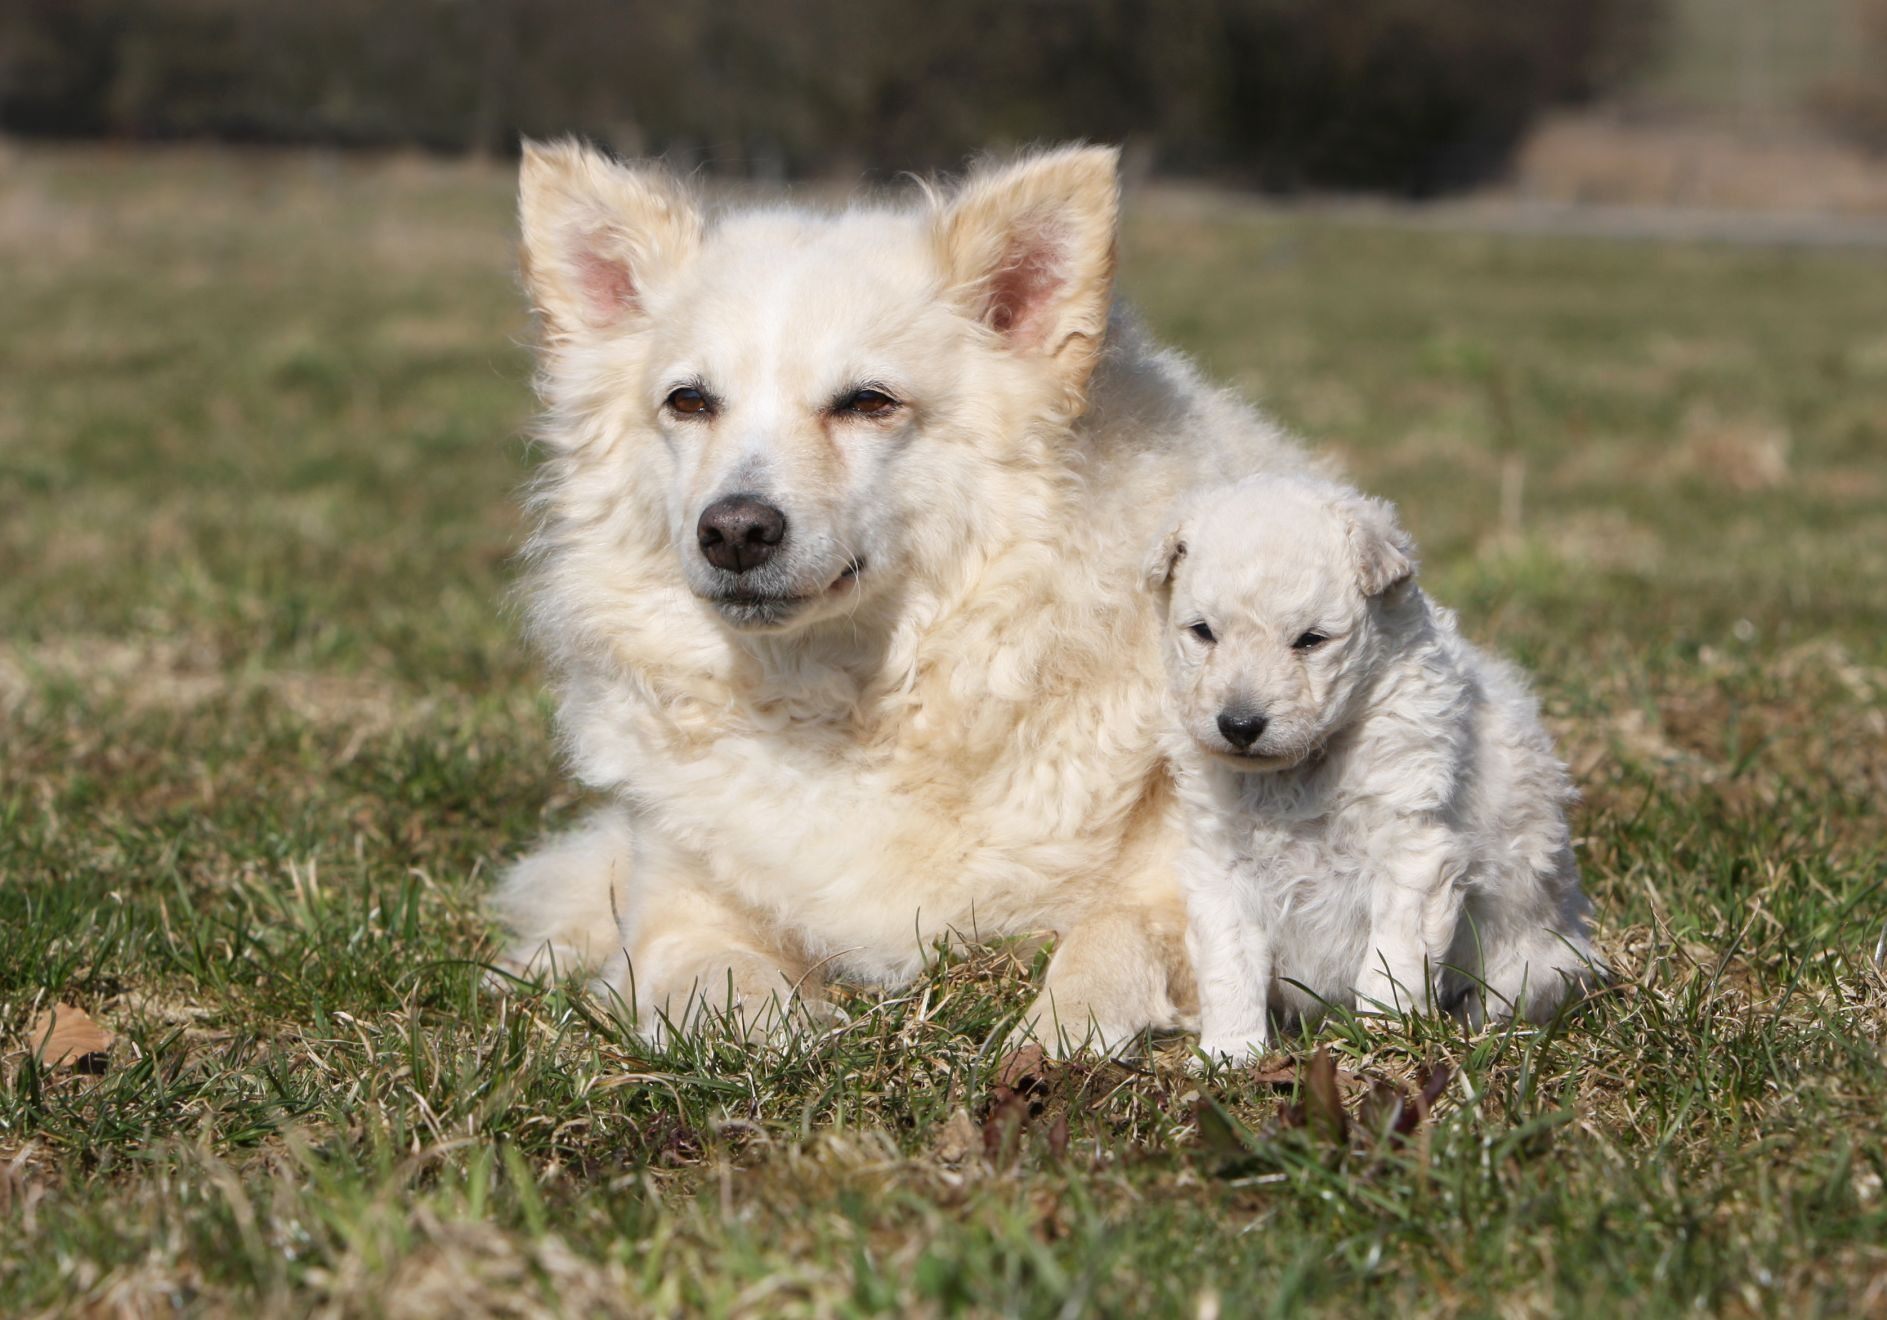 White Mudi lying on grass next to puppy